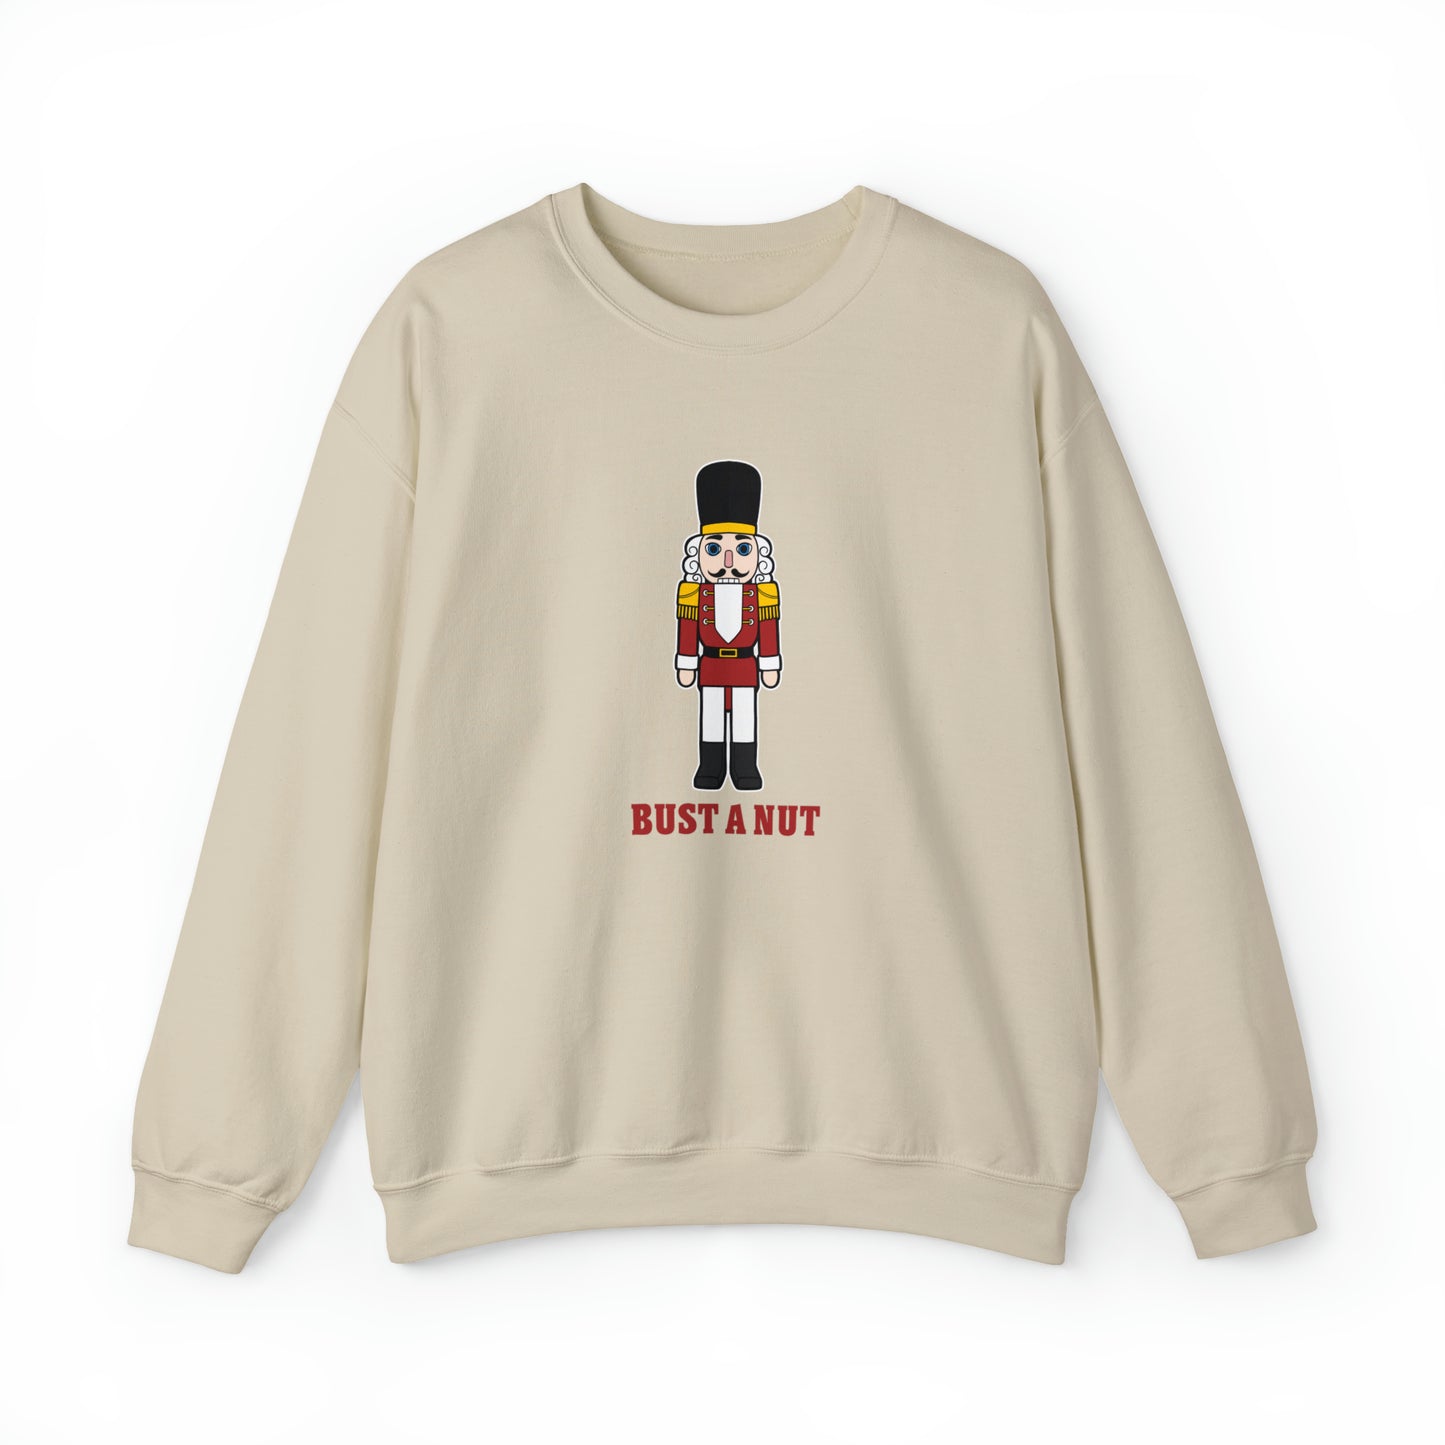 Custom Parody Crewneck Sweatshirt, Bust a Nut Design